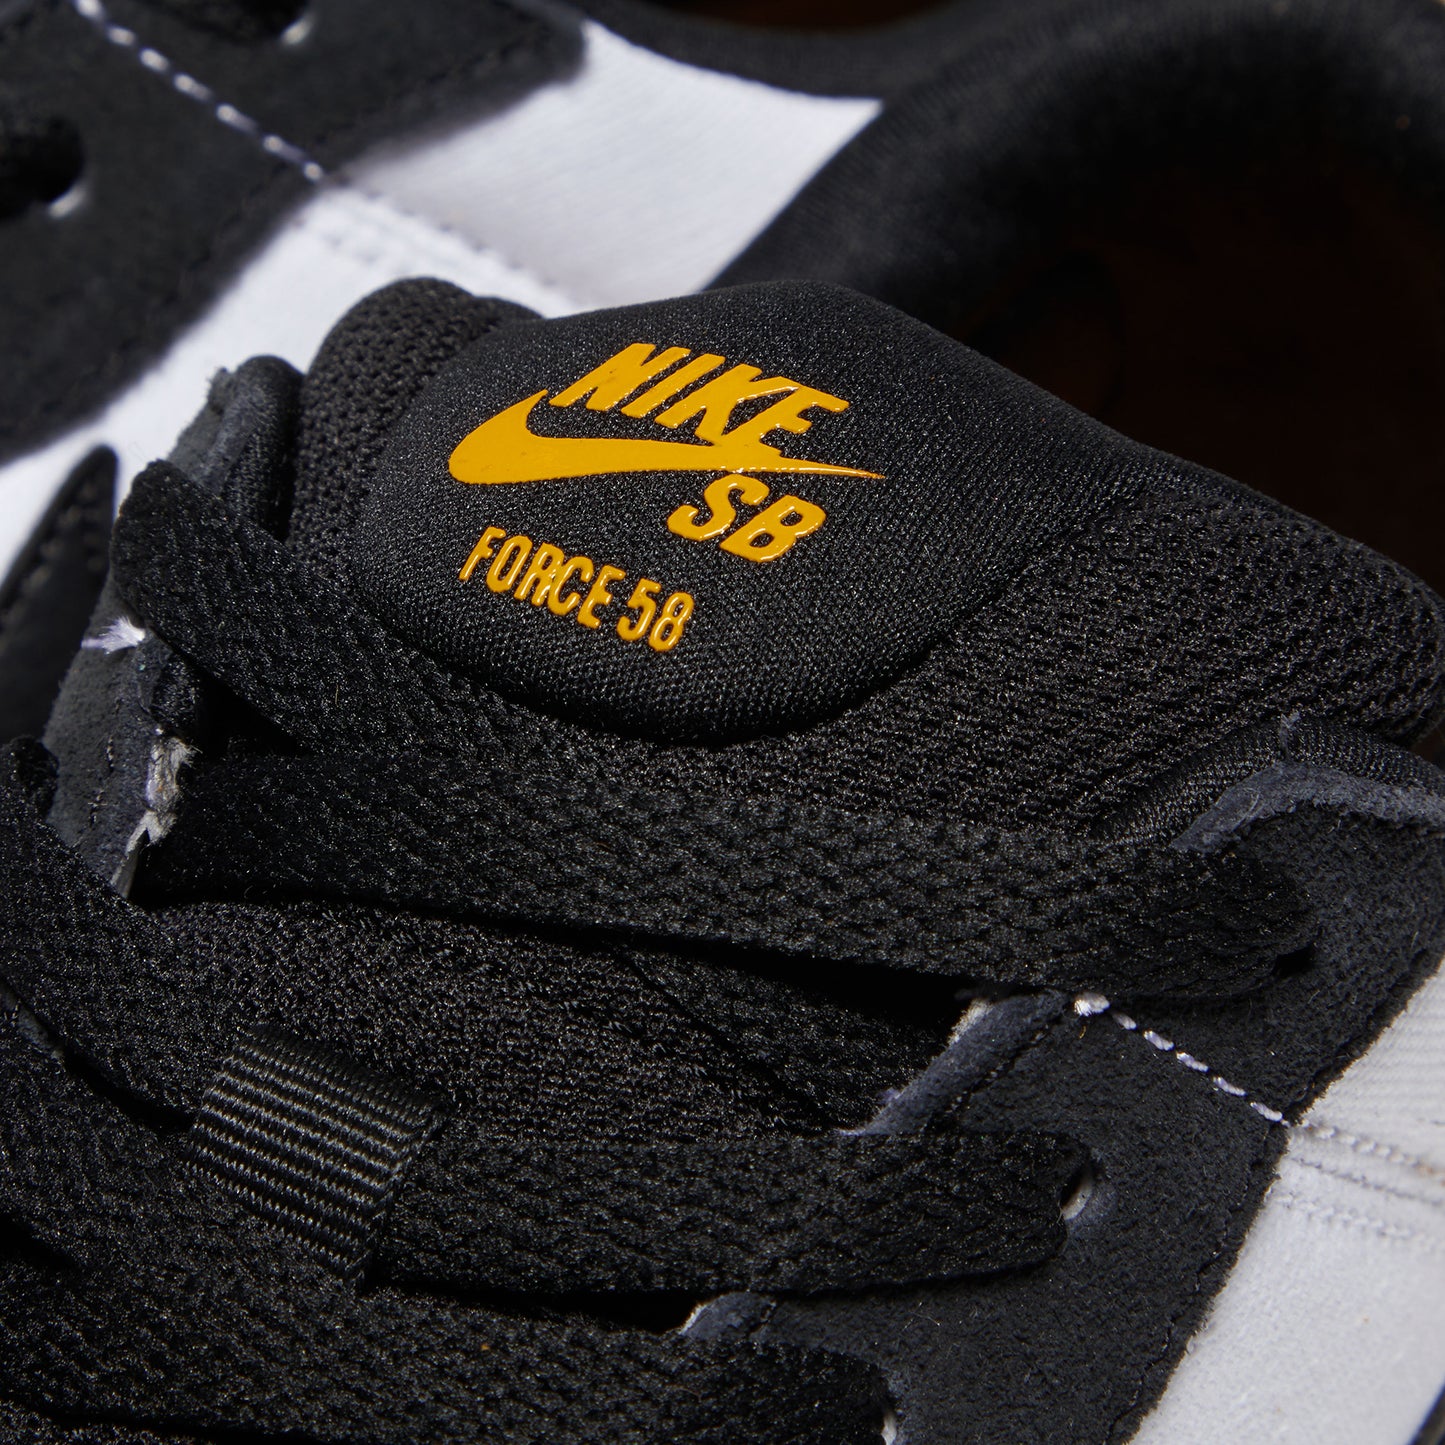 Nike SB Force 58 (UNIVERSITY GOLD/BLACK/WHITE)